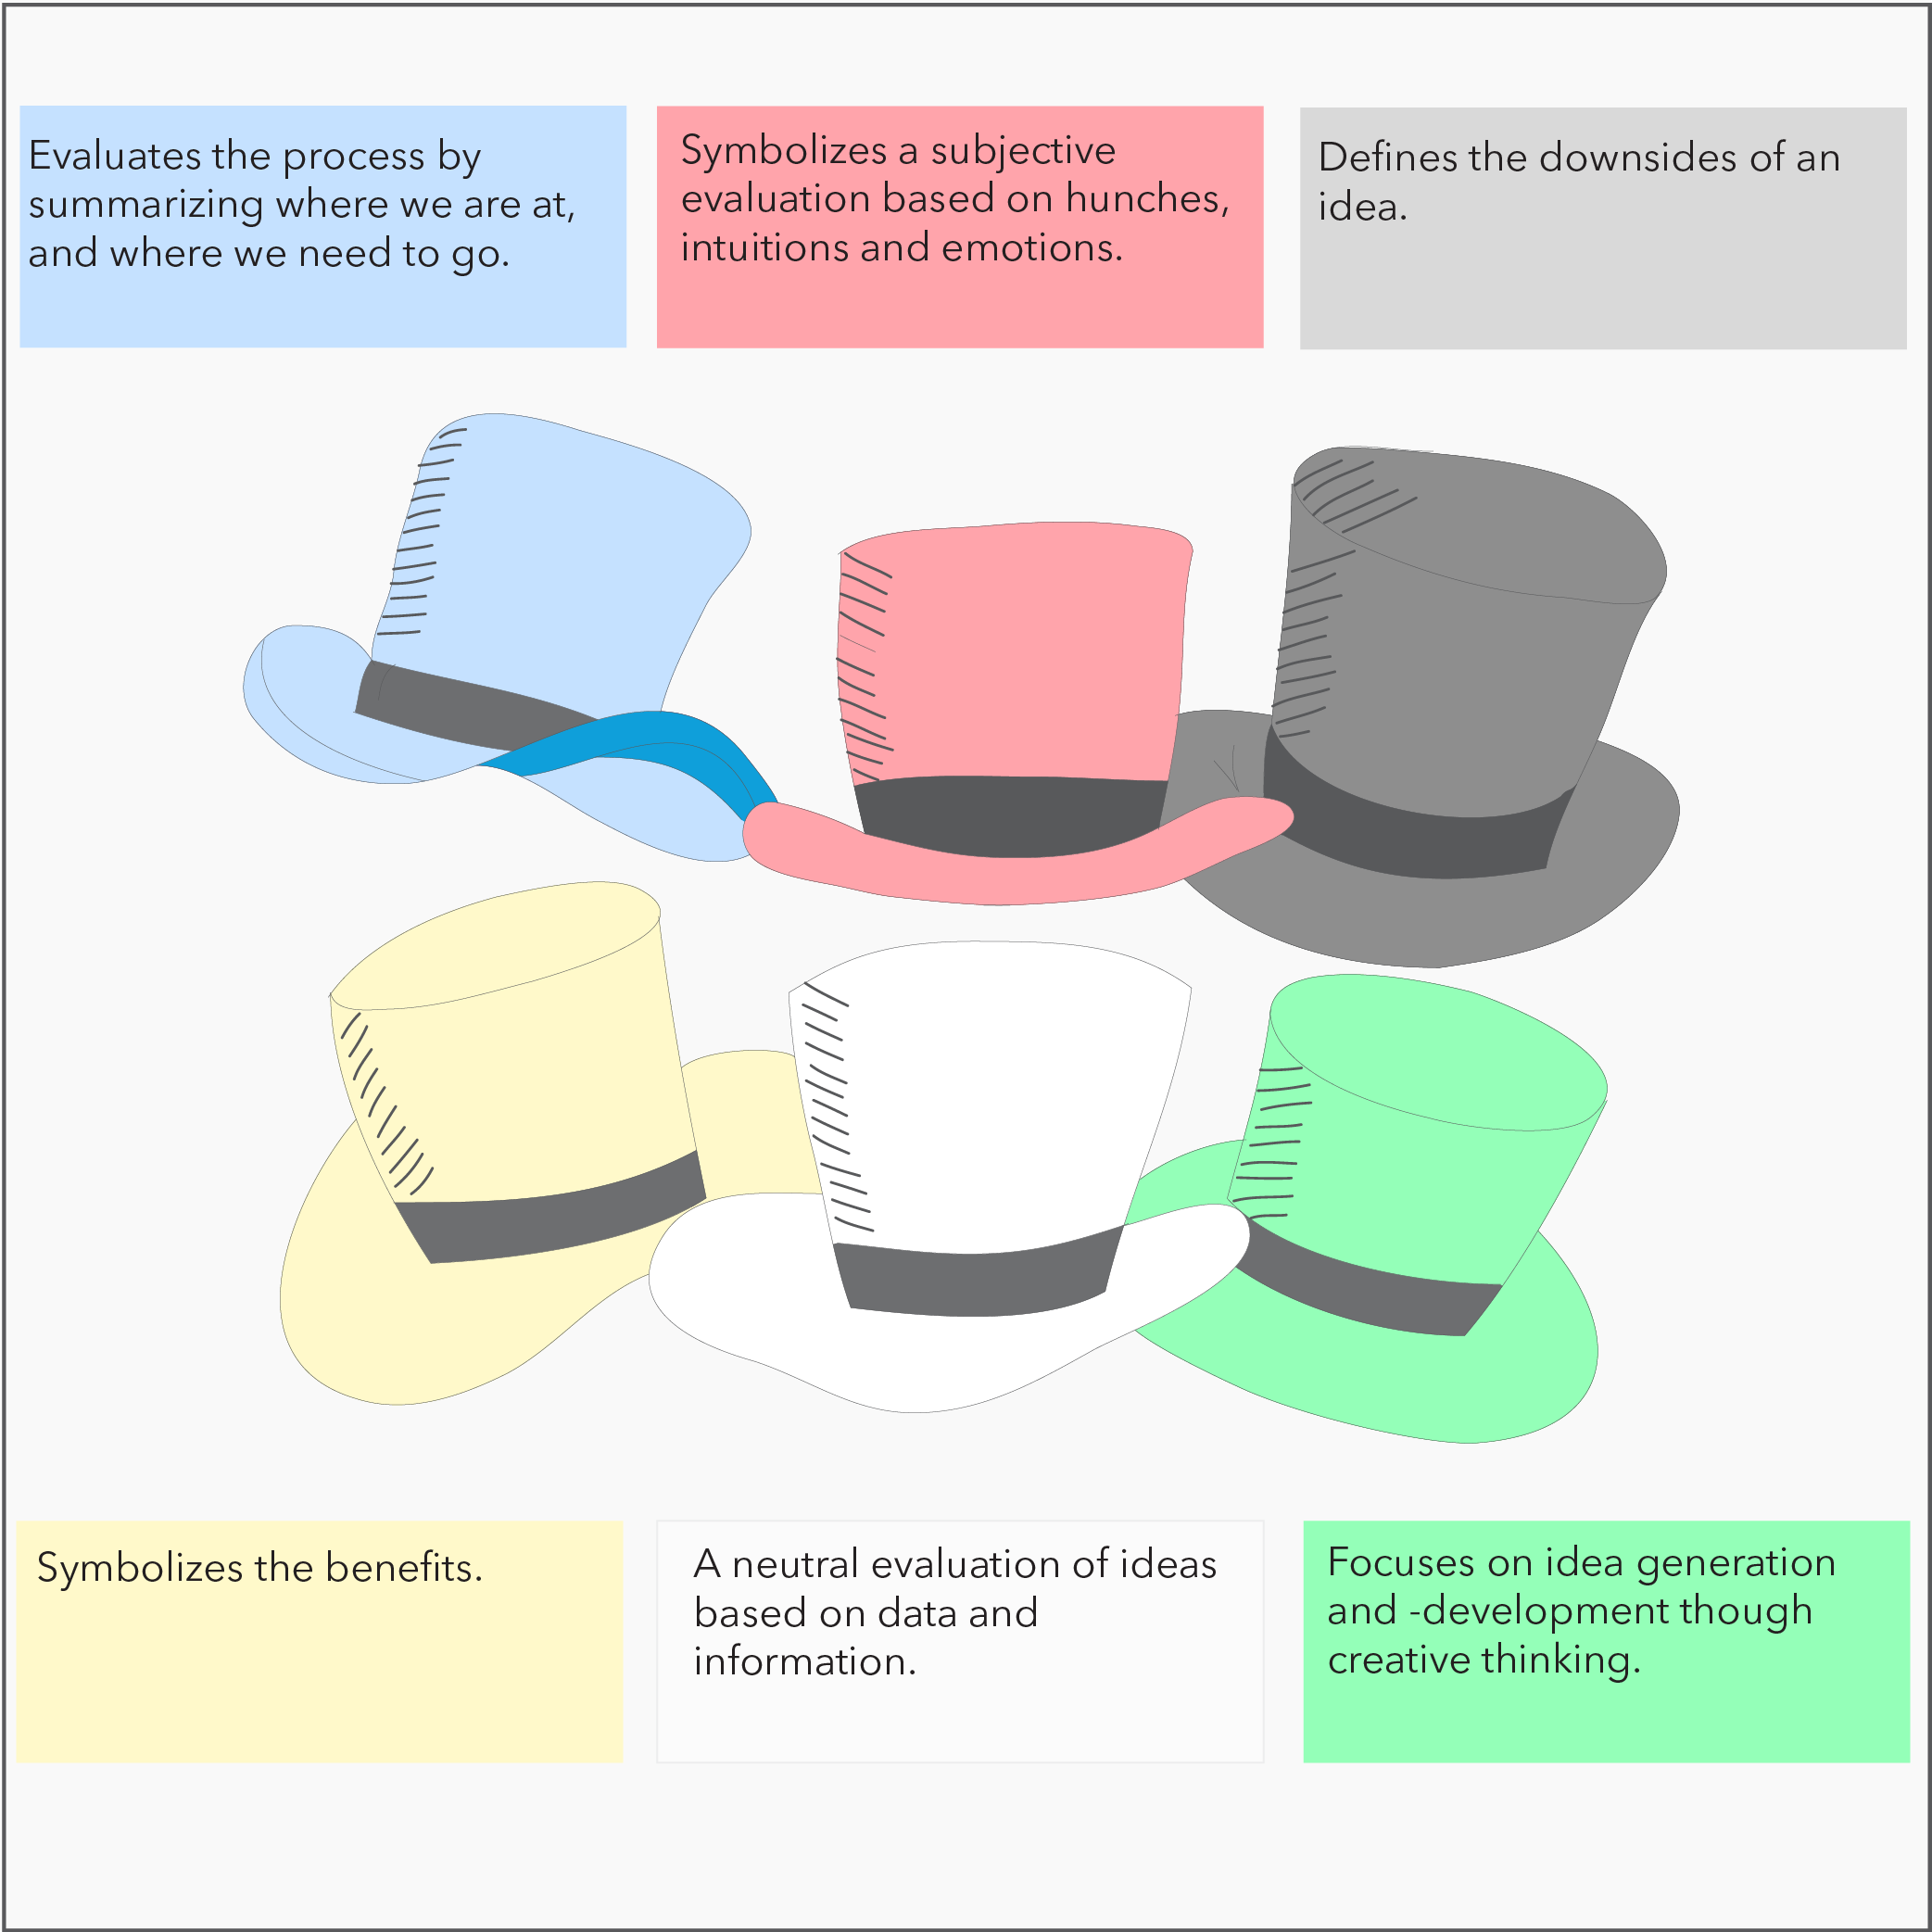 Six thinking hats